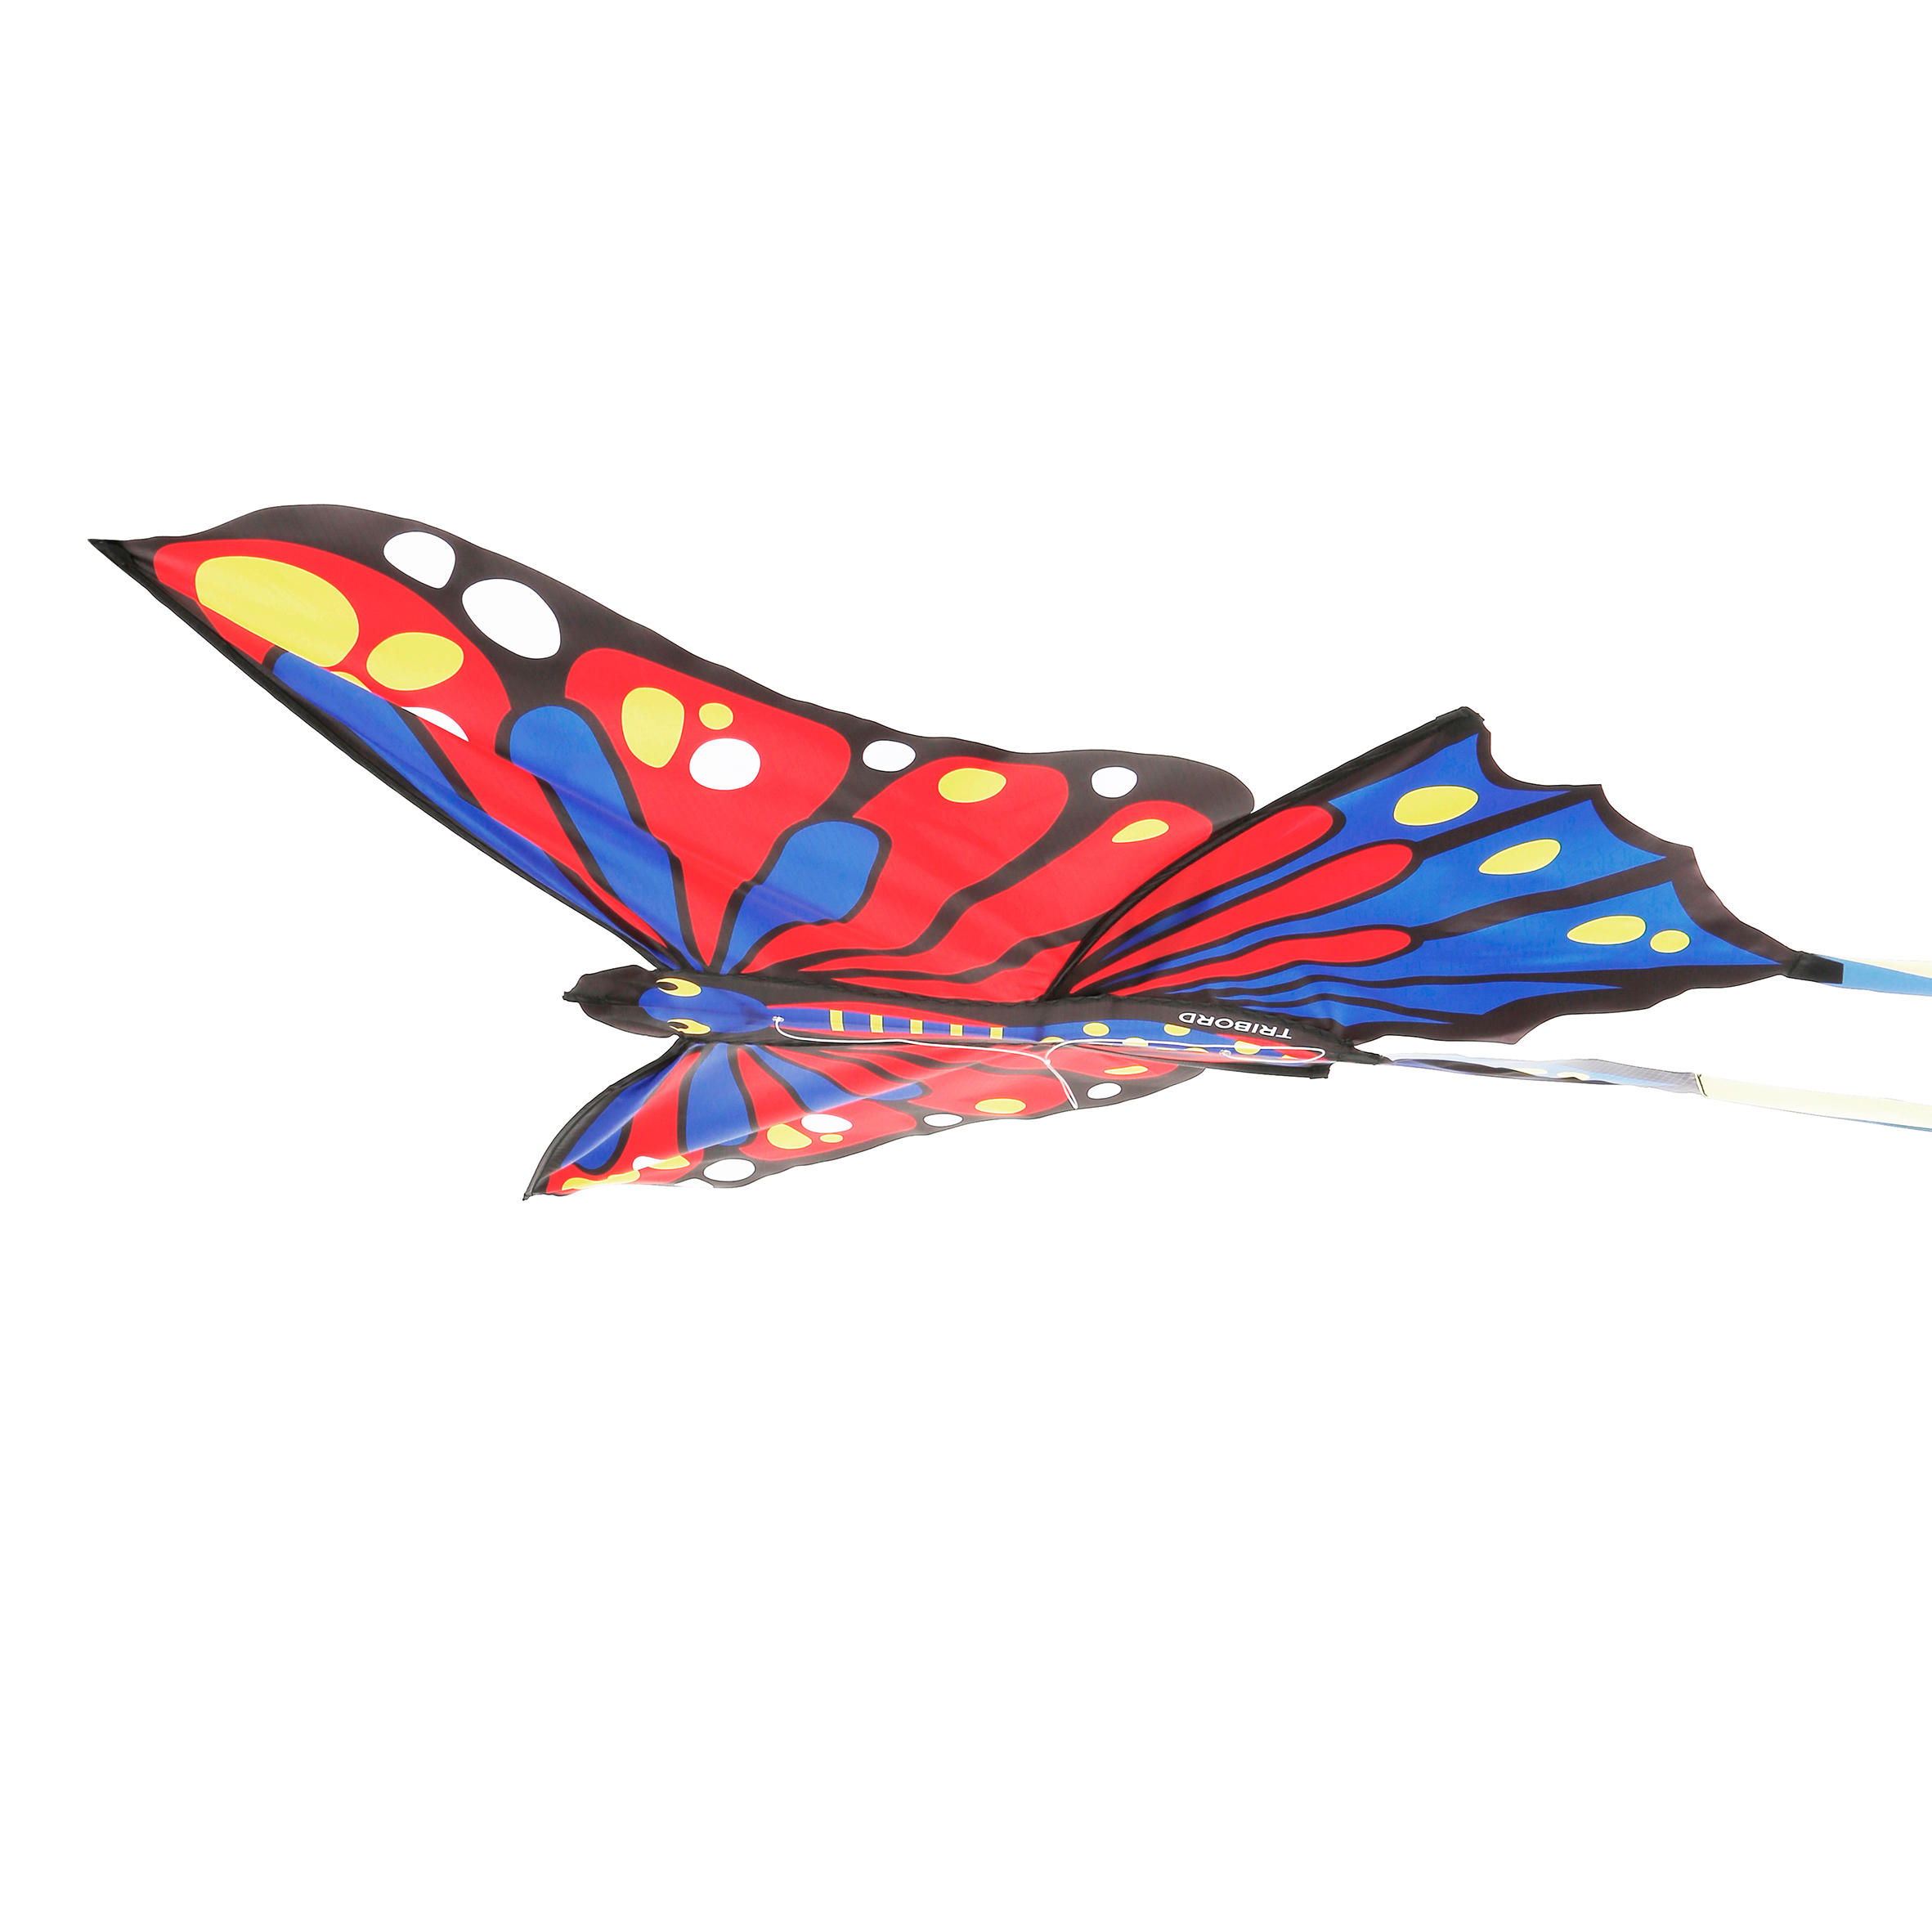 Single-Line Kite - MFK 160 Red/Blue - ORAO